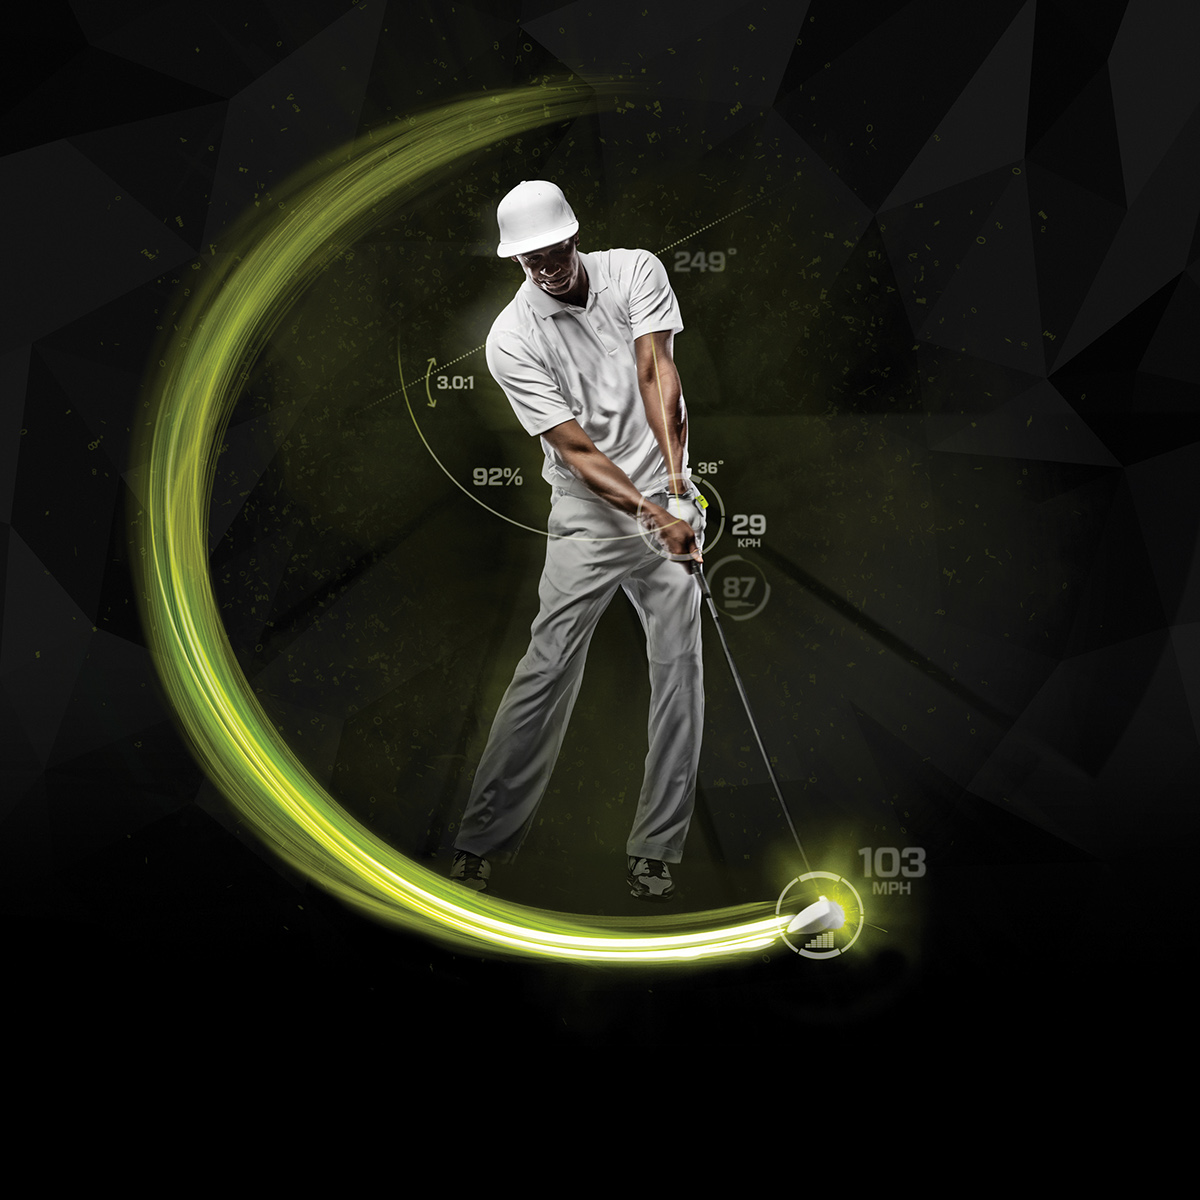 product design apple iphone android golf baseball tennis sport sports technology Technology sensor accelerometer